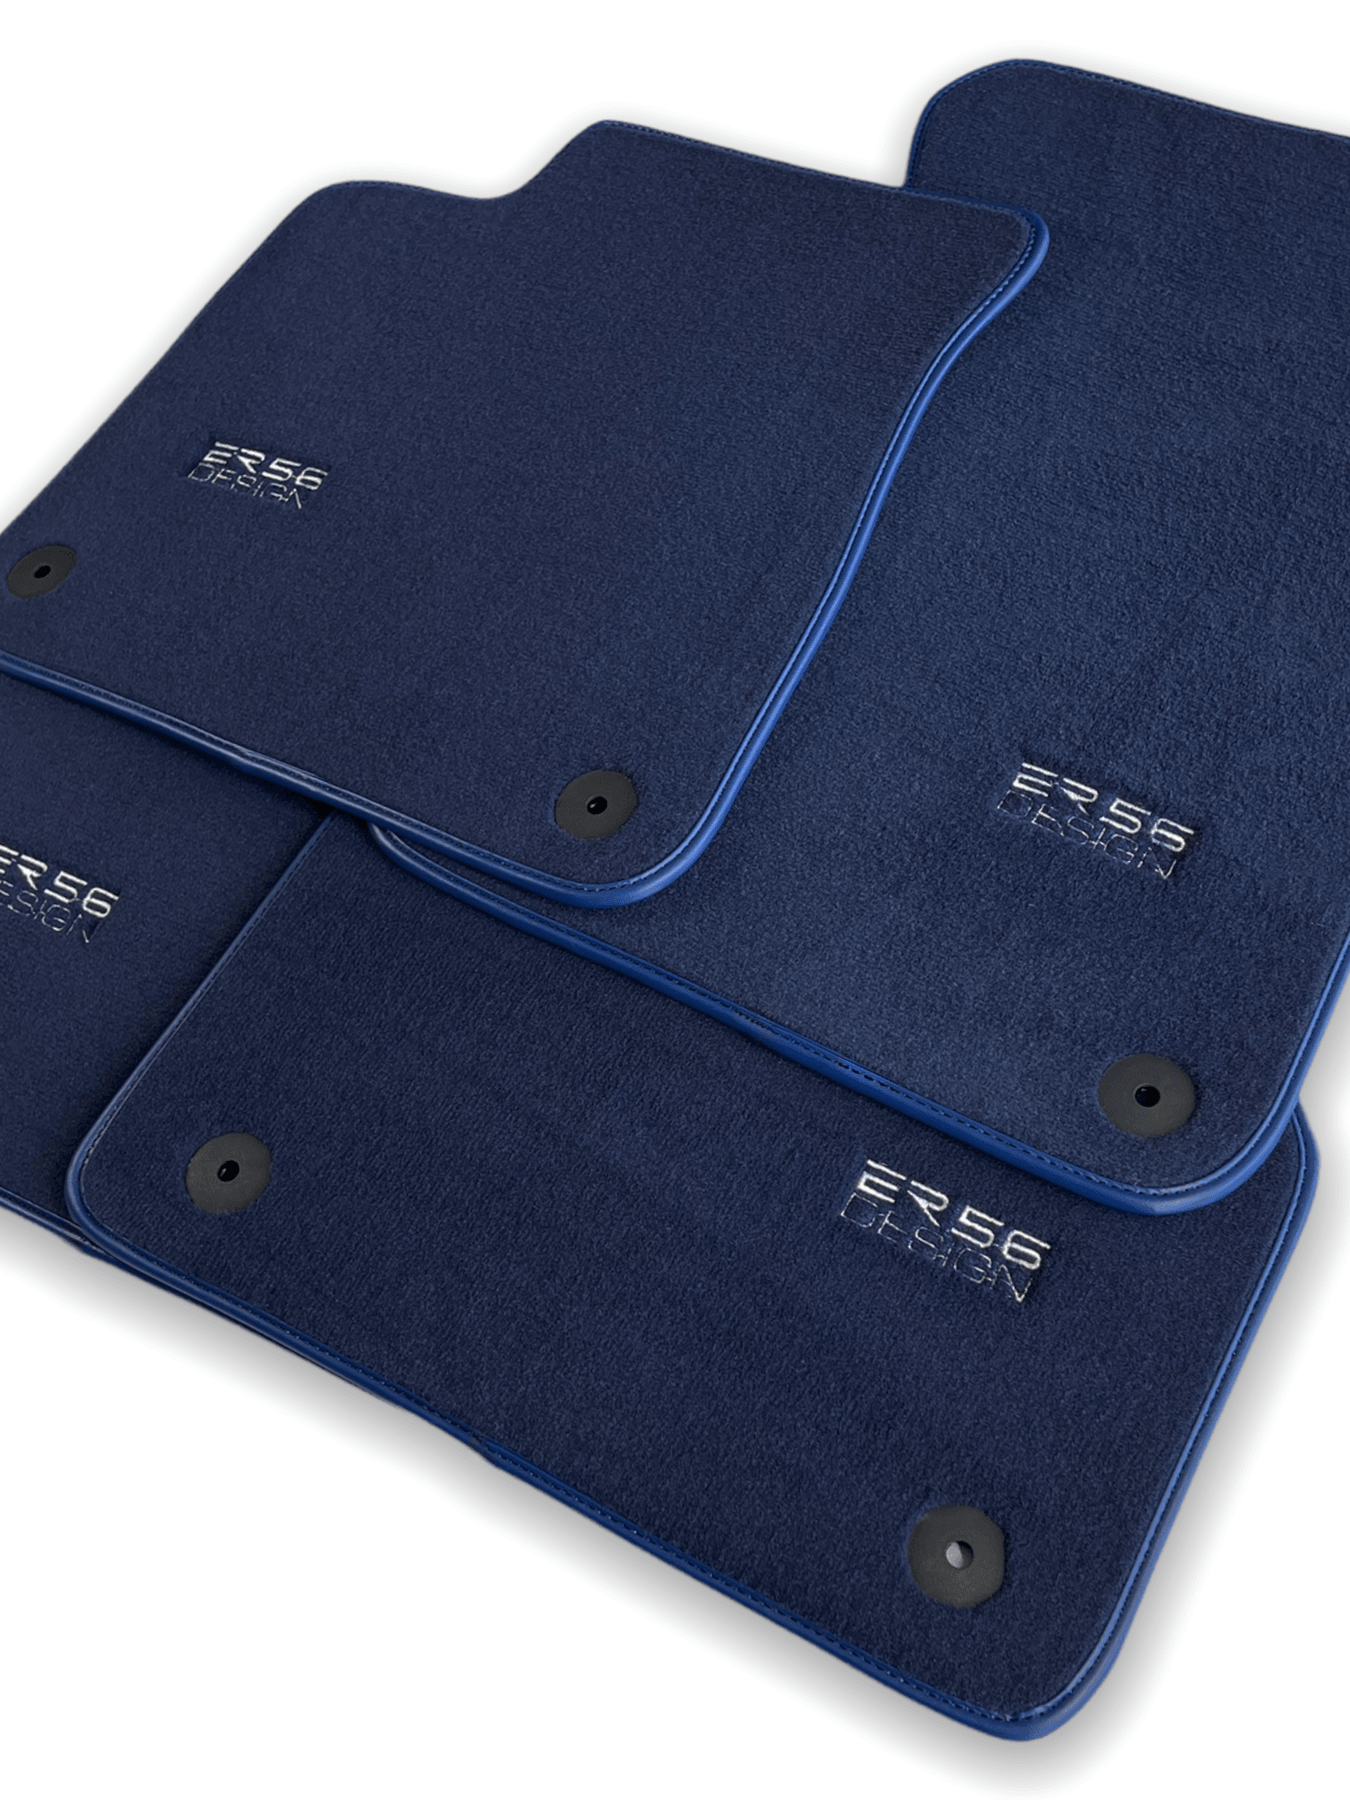 Dark Blue Floor Mats for Audi A7 - C7 (2010-2018) | ER56 Design